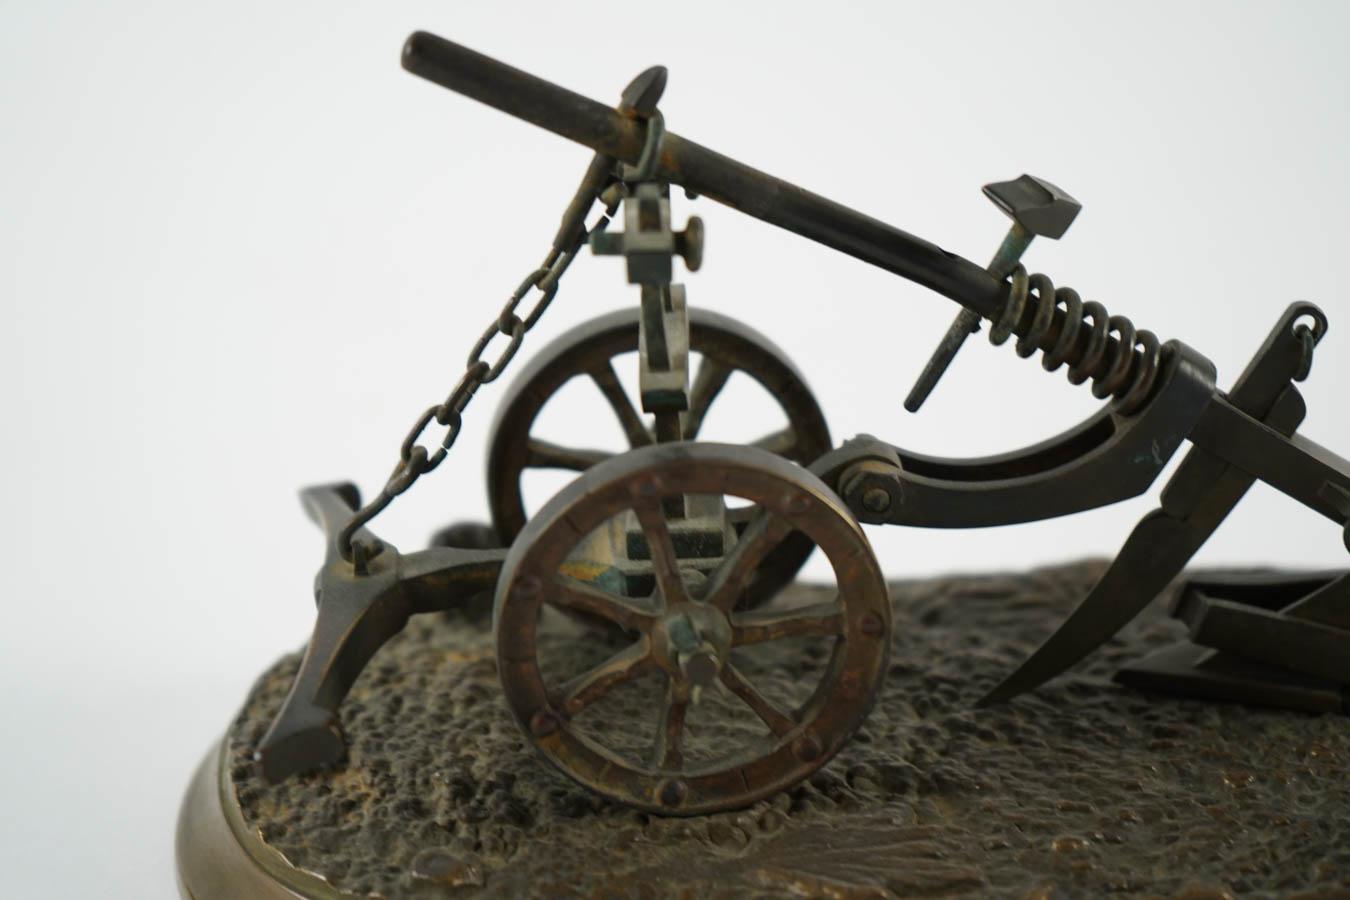 Miniature bronze plow, circa 1900
